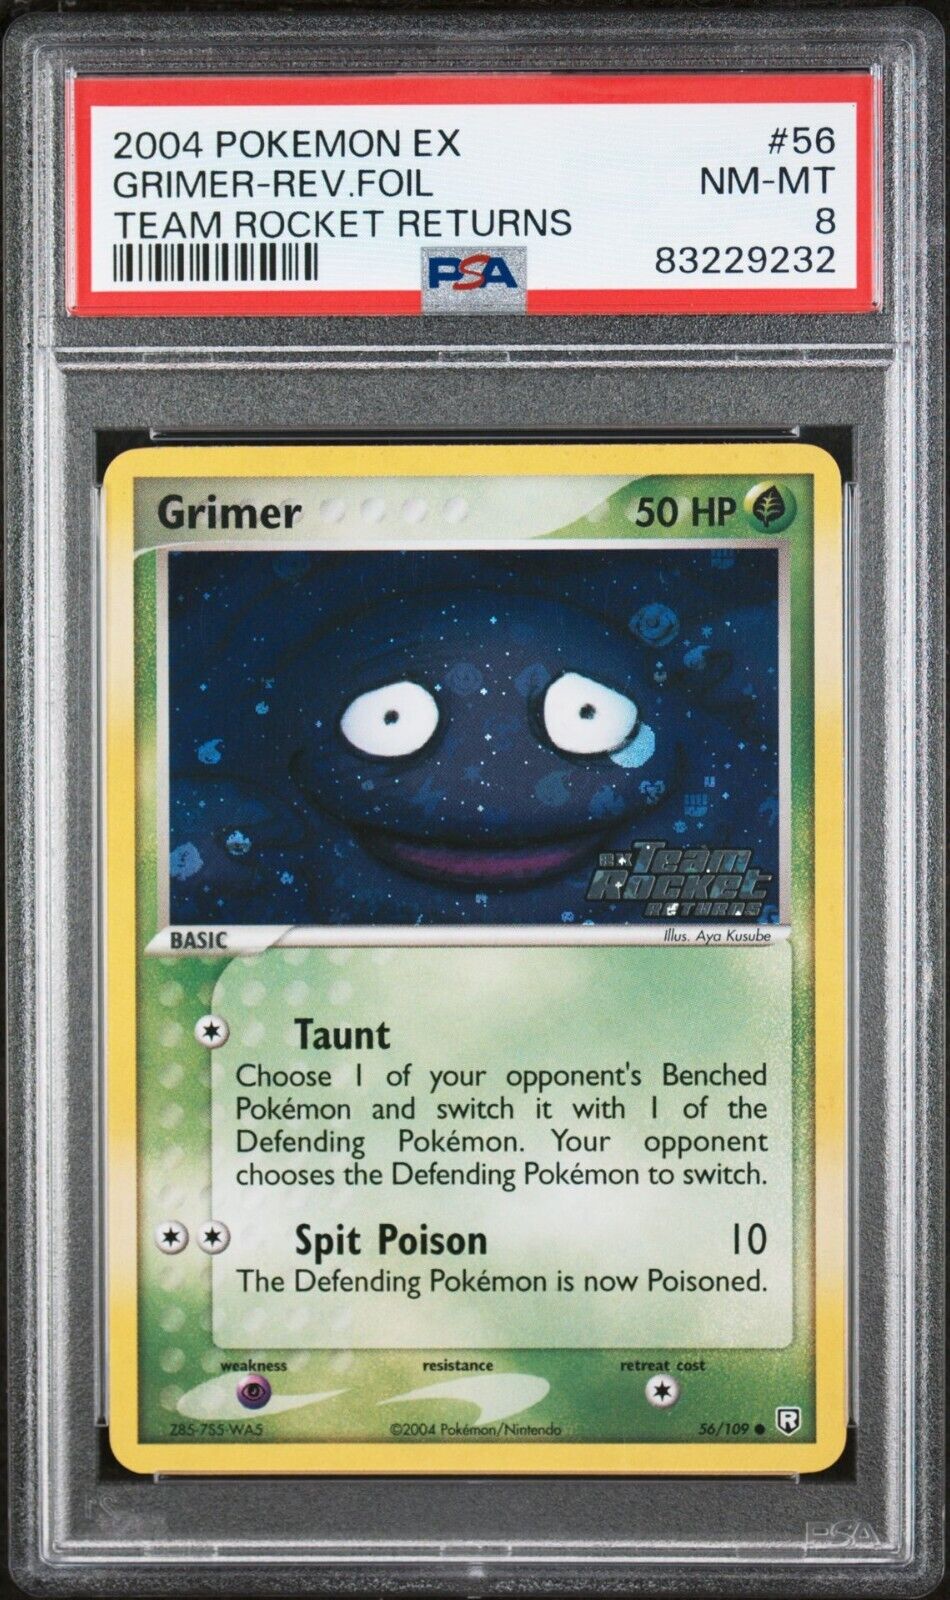 2004 Pokémon Team Rocket Returns GRIMER Rev. Foil #56 - PSA 8 NM-MT